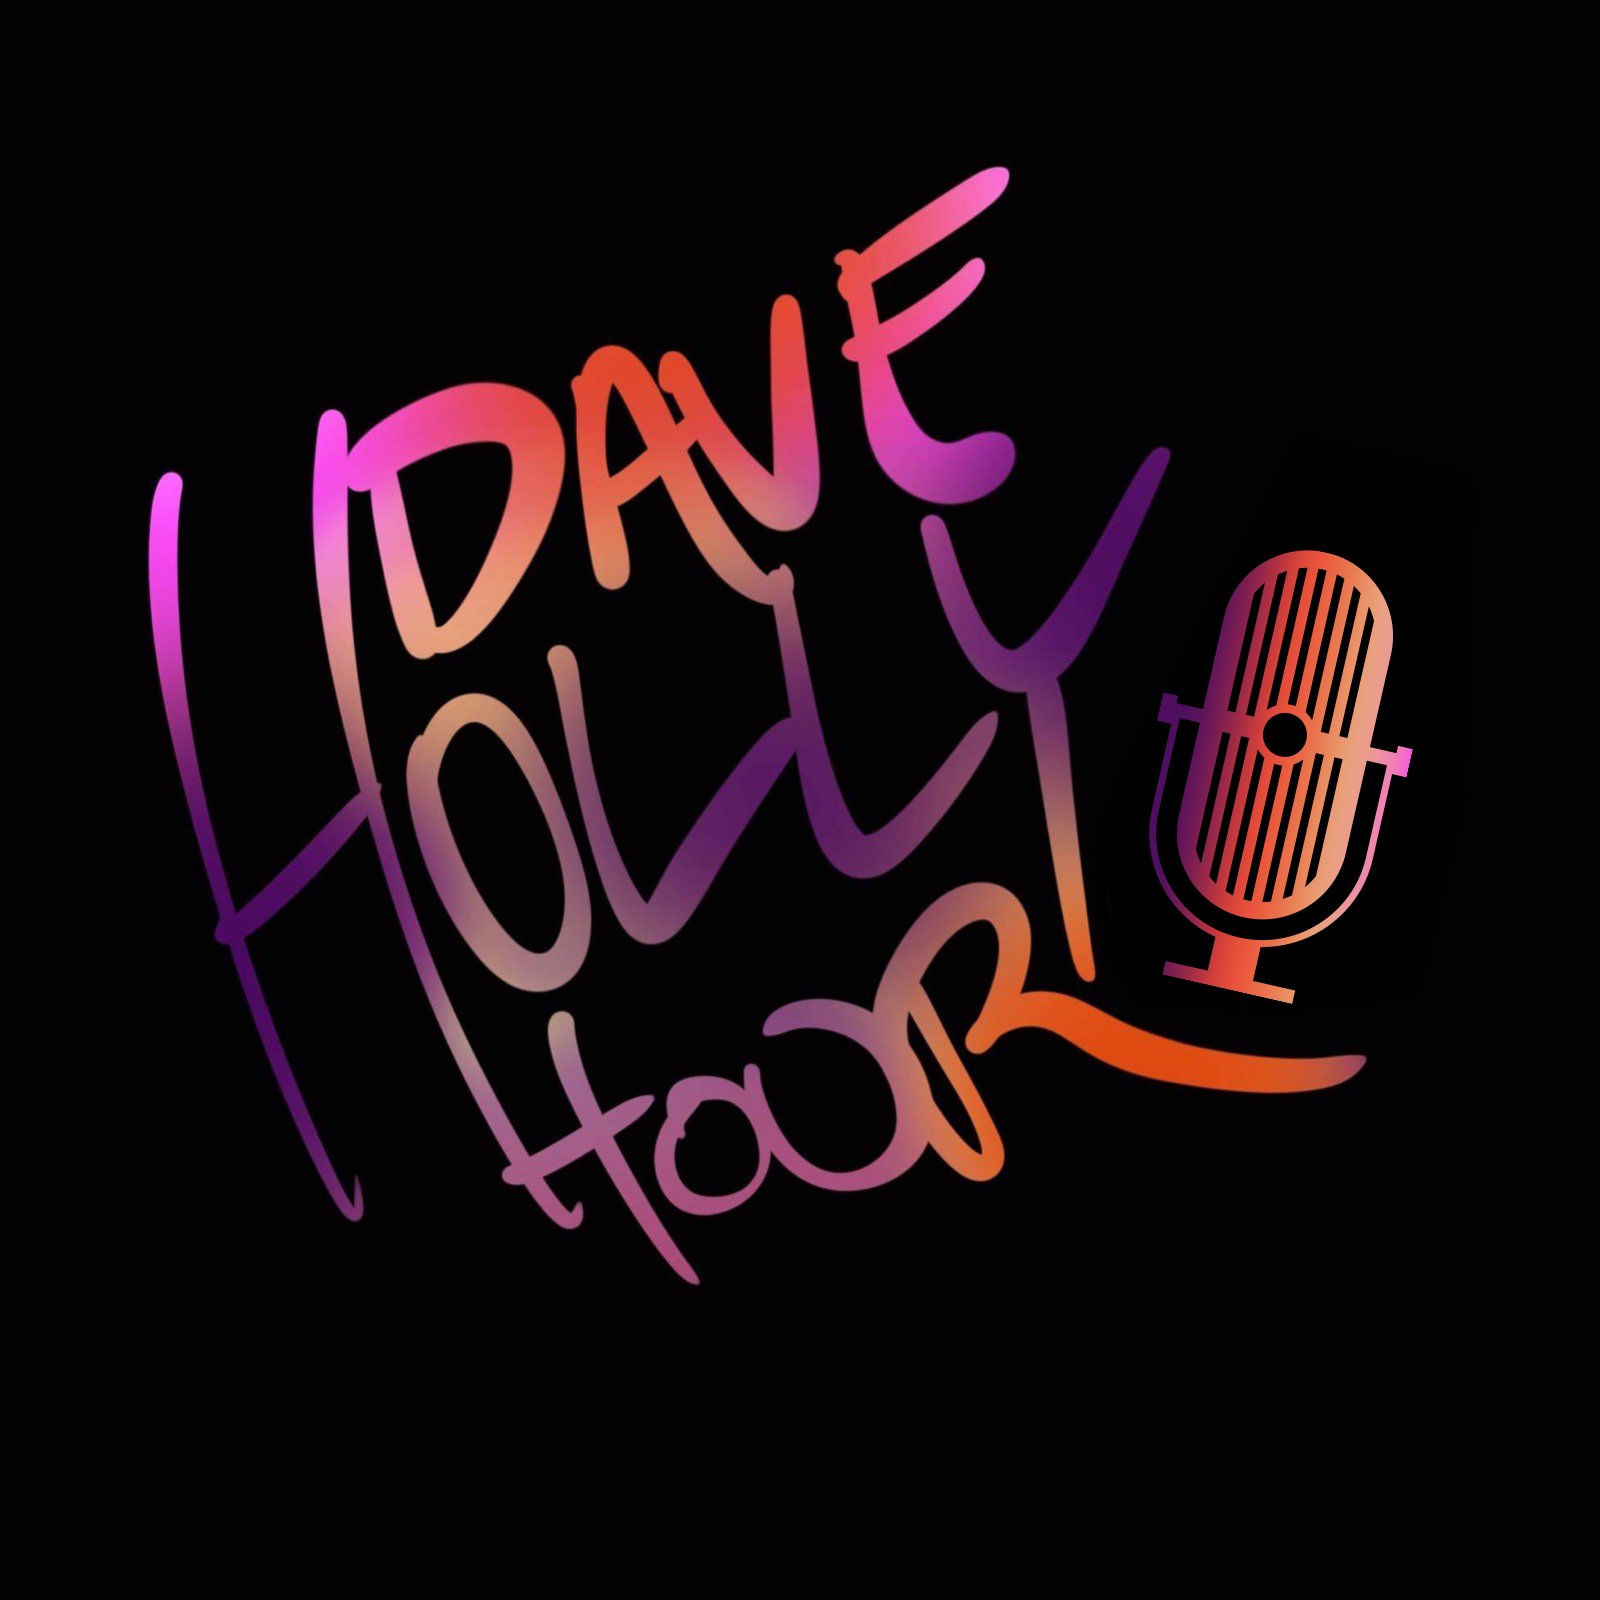 Dave Holly Hour Episode 155 November 10, 2022